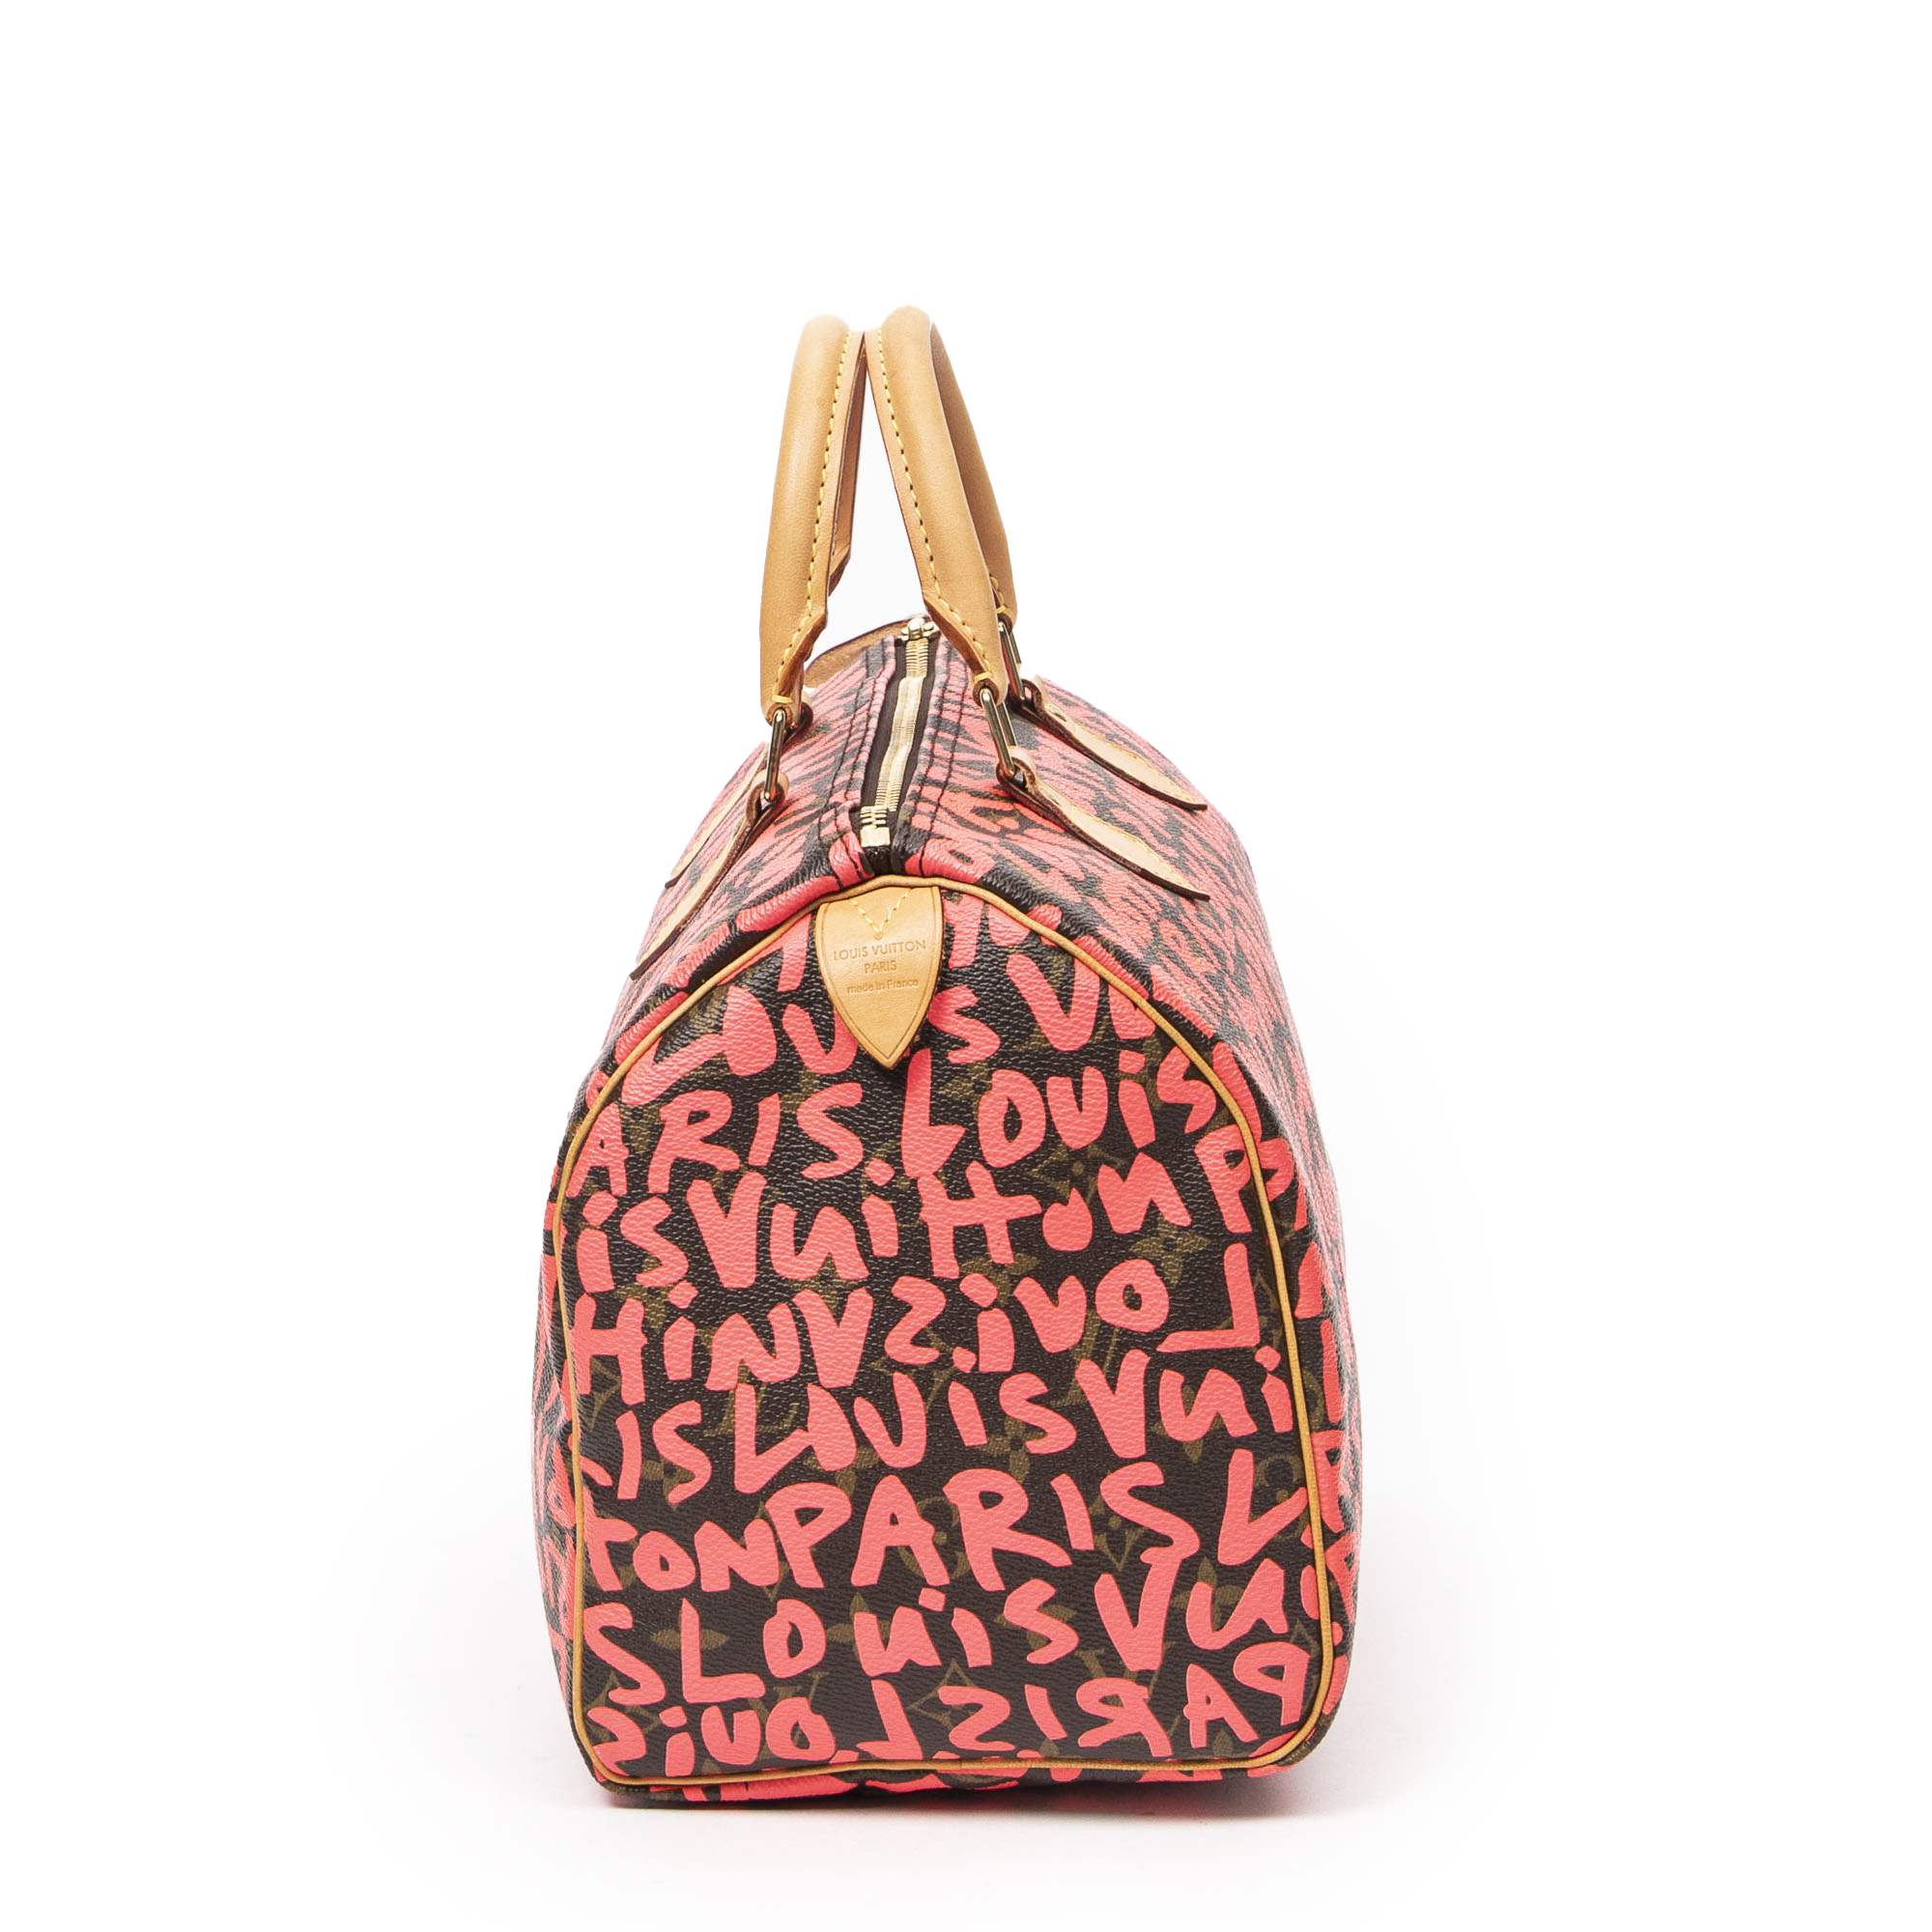 Louis Vuitton Graffiti Speedy  Louis vuitton speedy bag, Louis vuitton  handbags, Louis vuitton